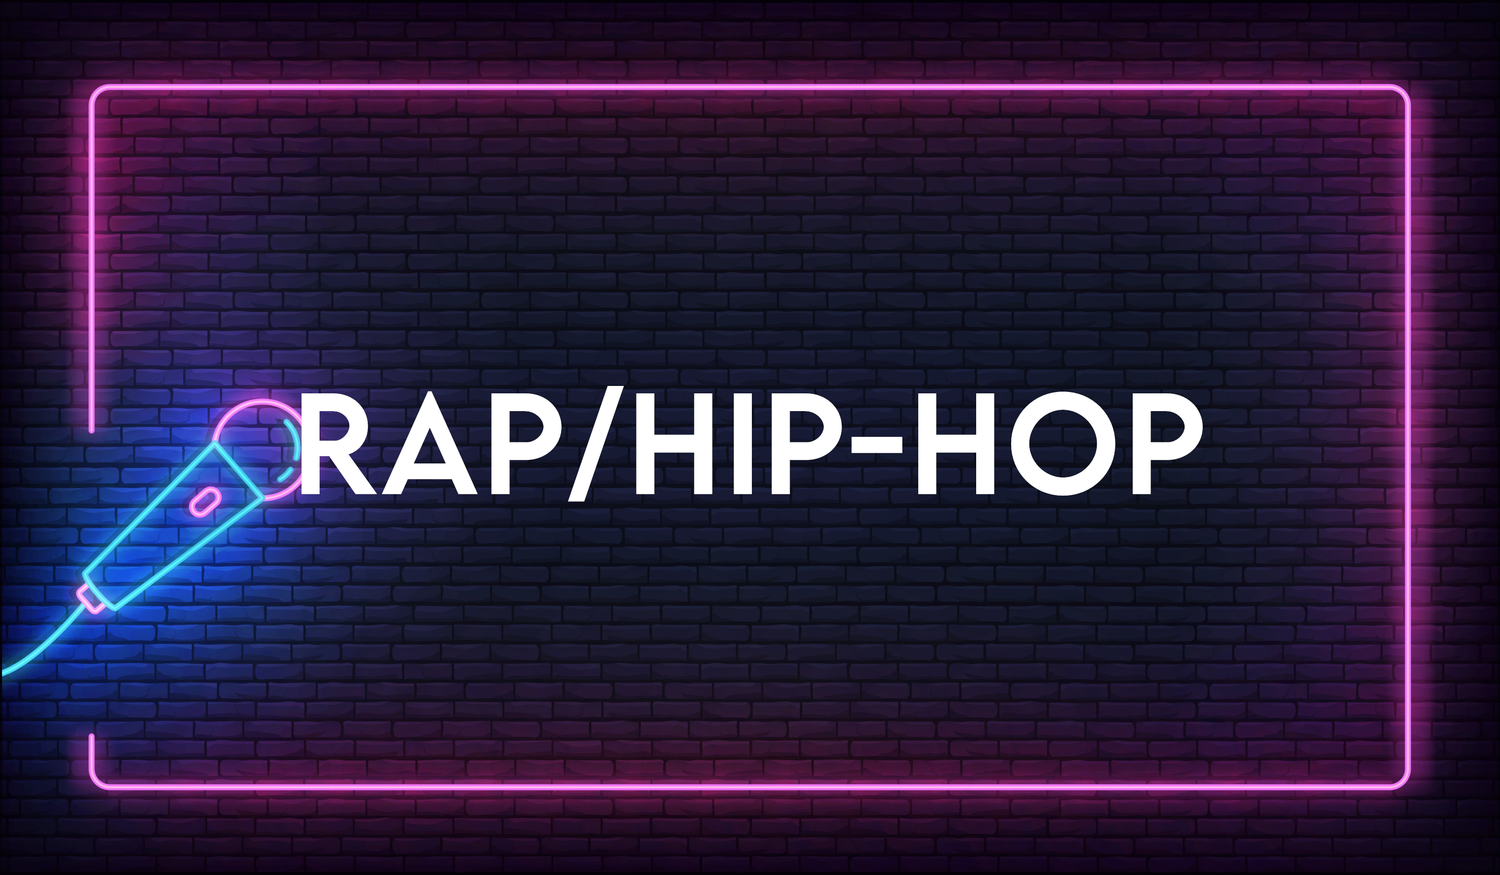 Rap/Hip-Hop